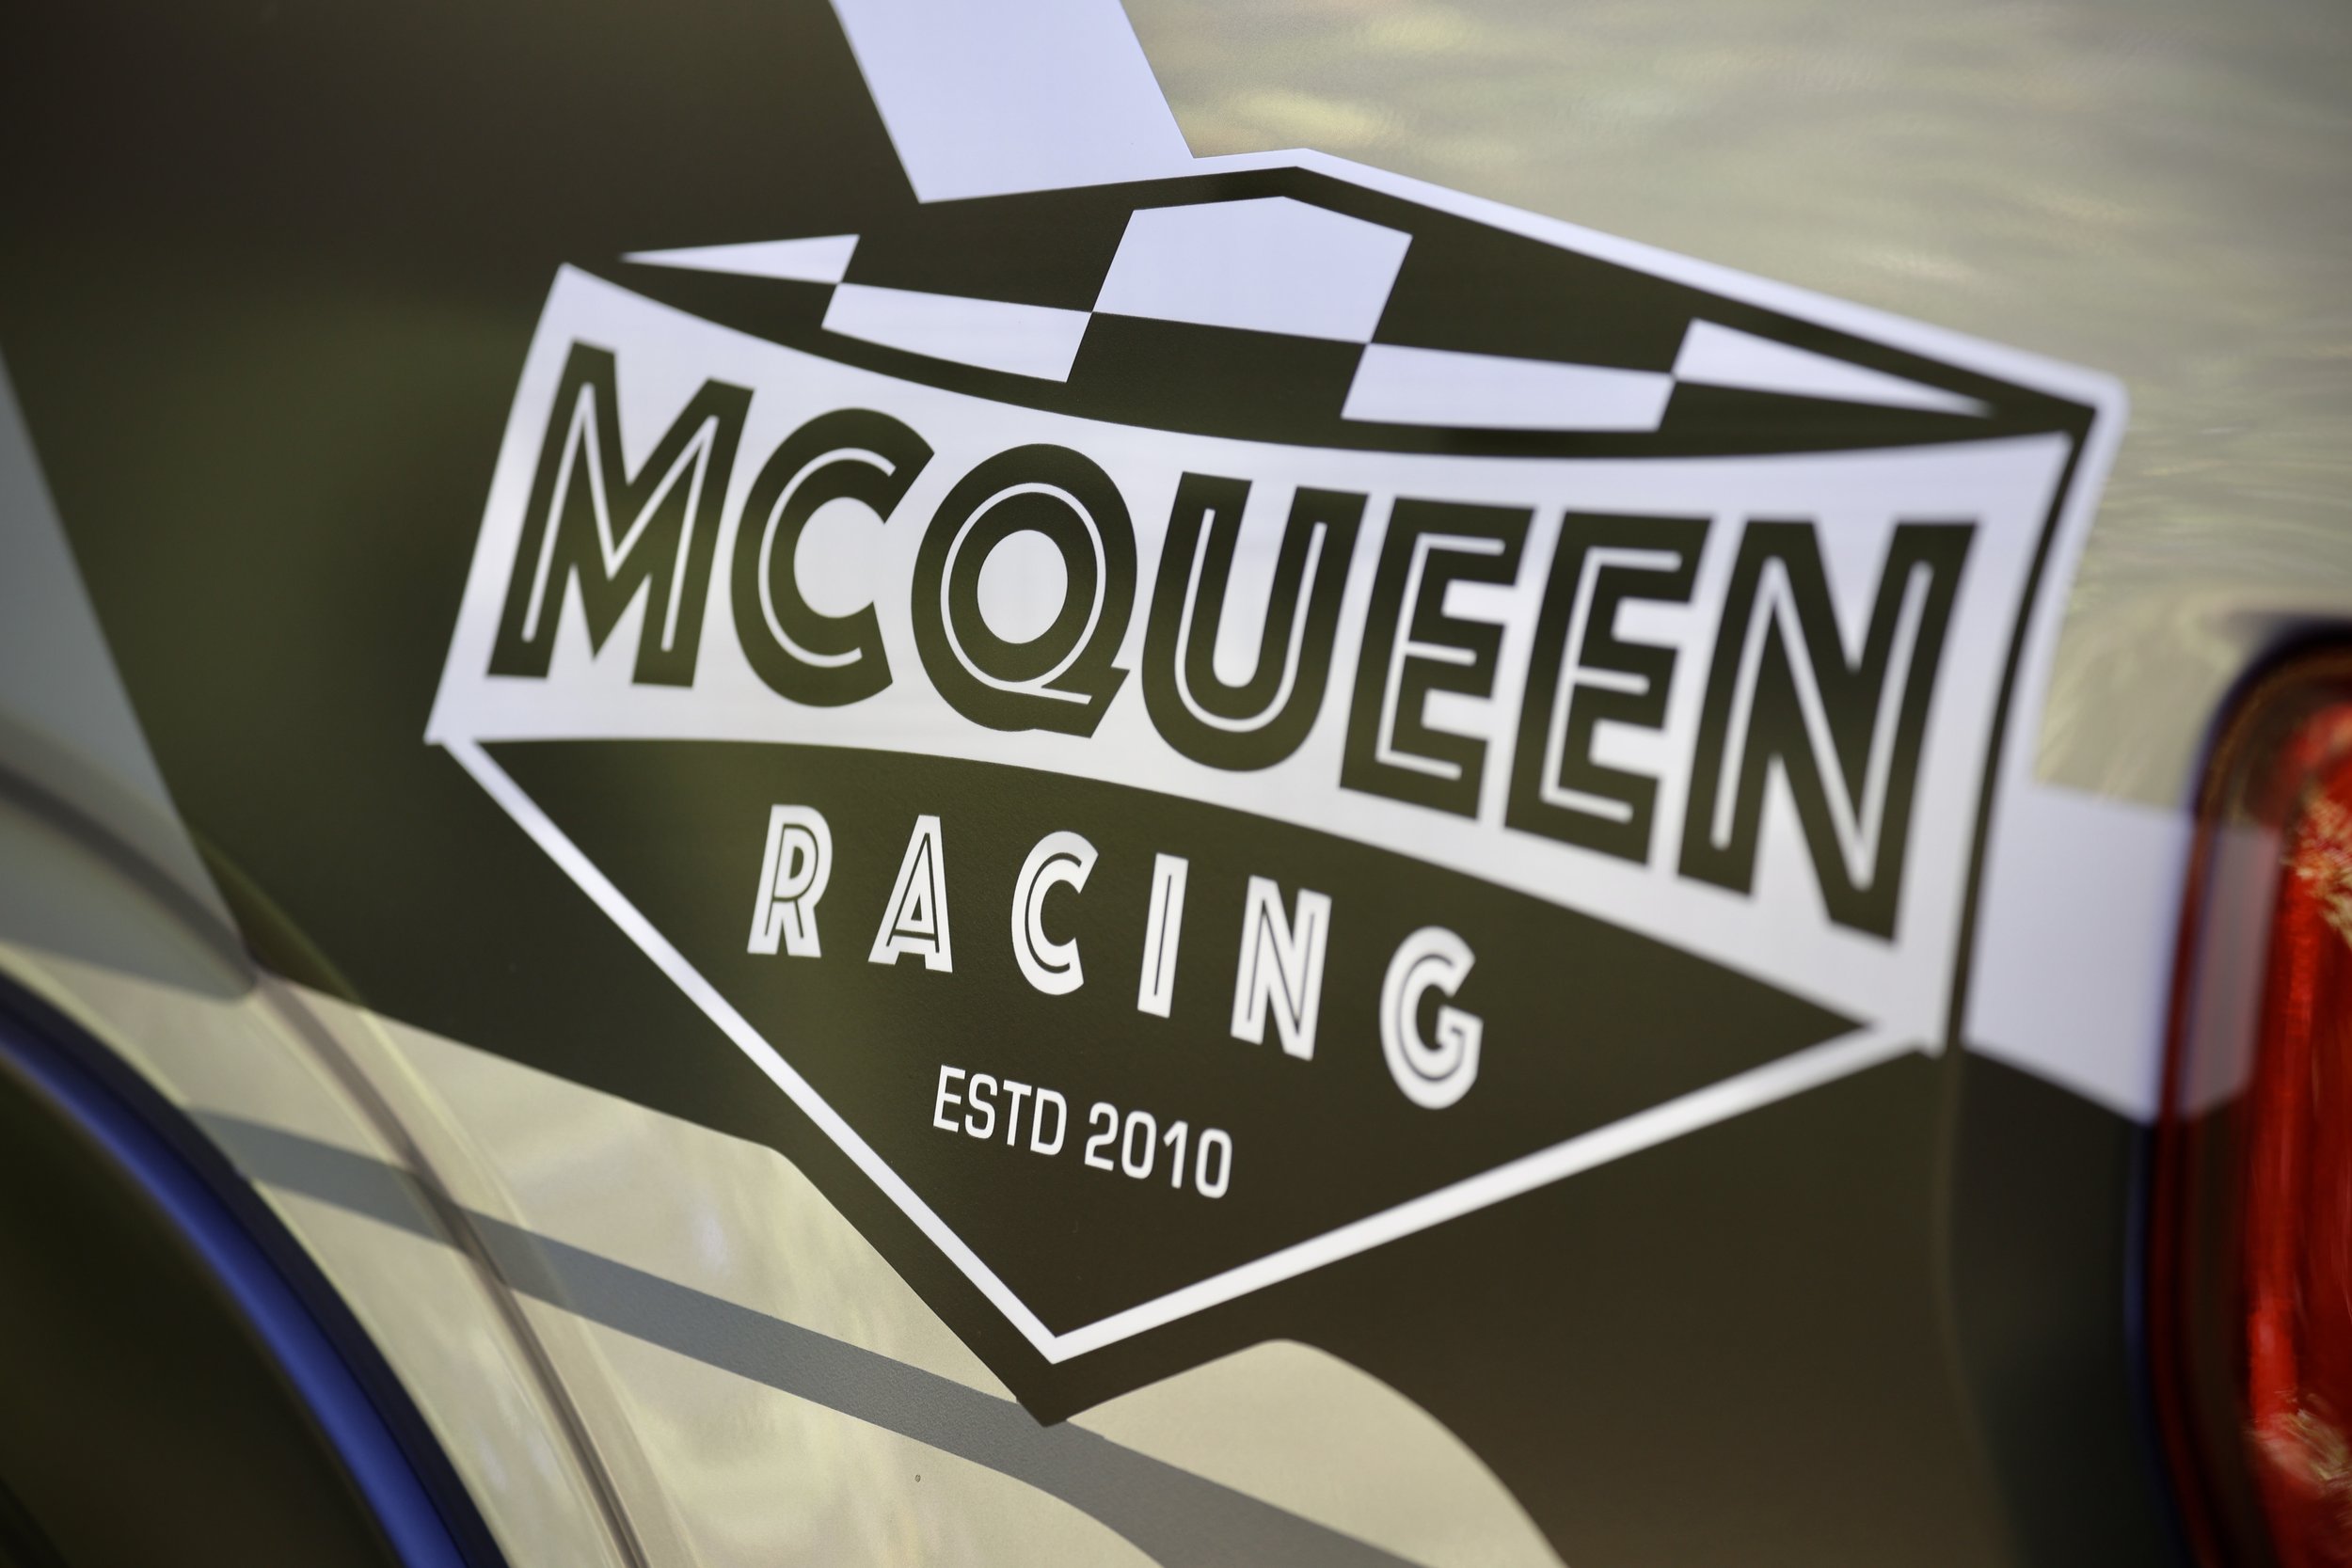 McQueen Racing F-150 - 78 rear side graphics.jpeg